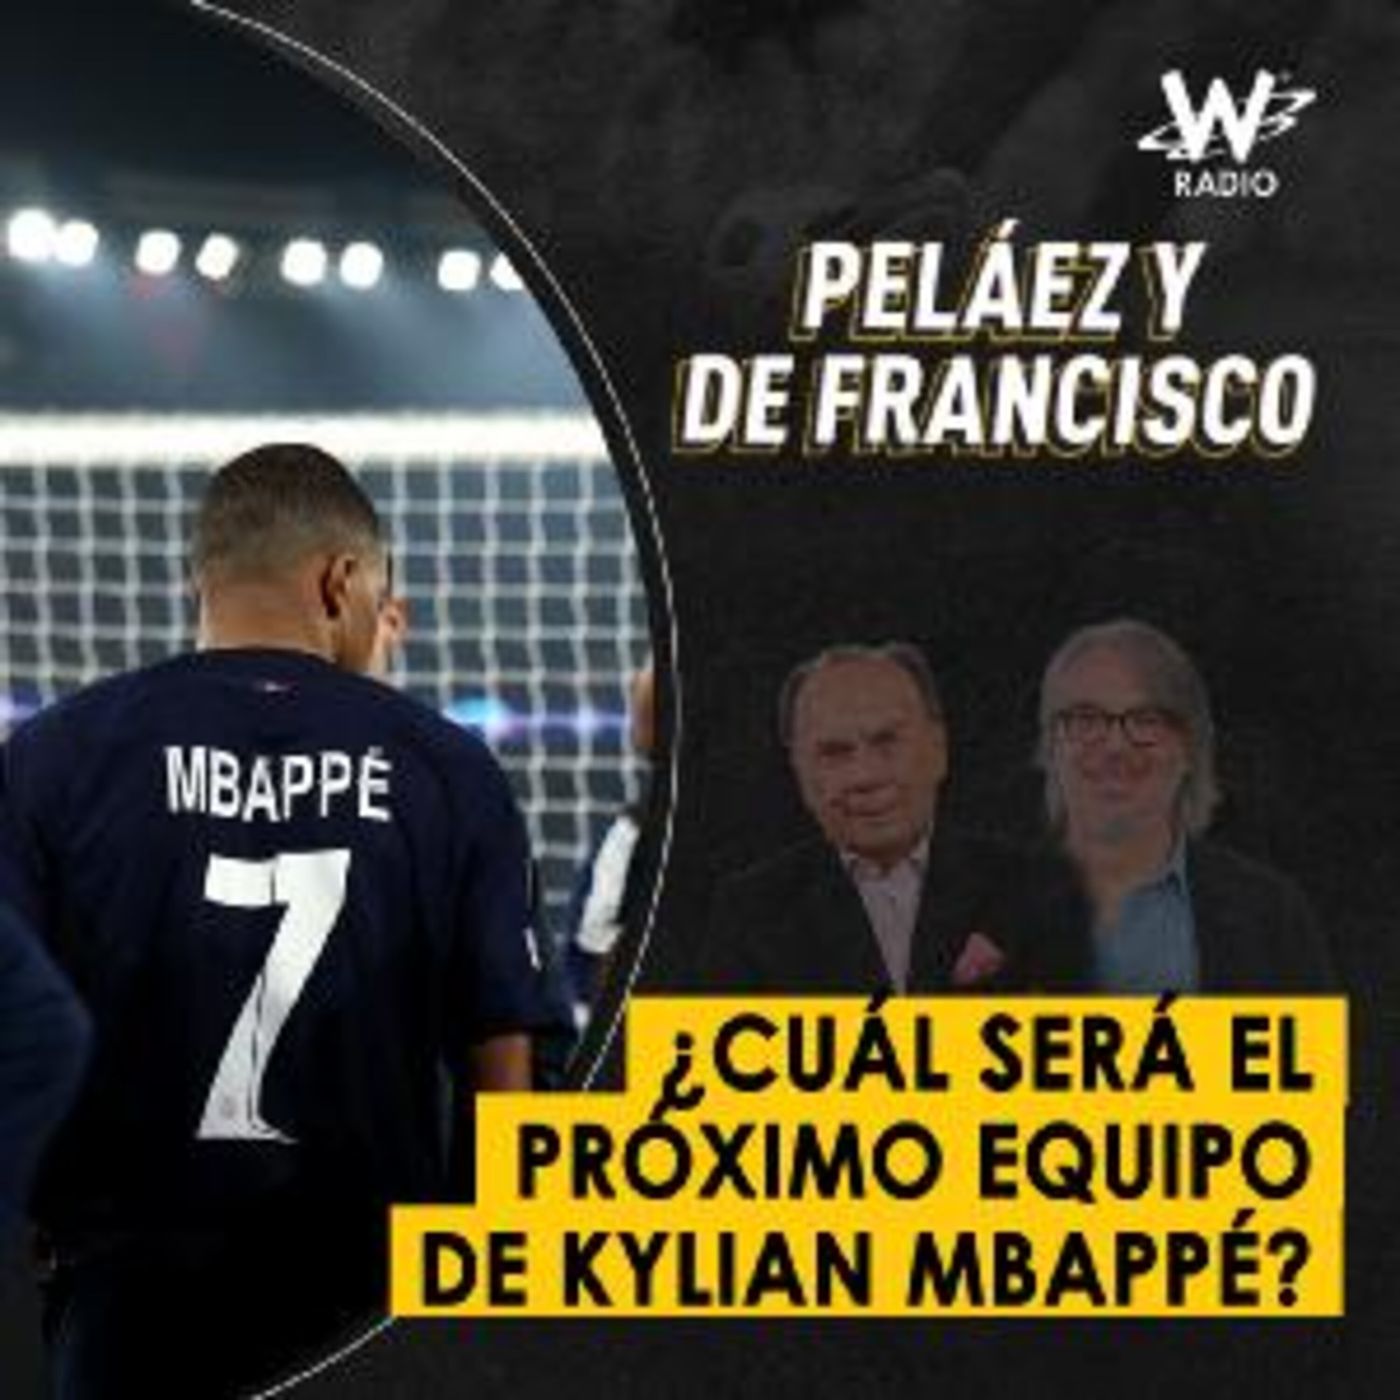 ¿Cuál será el próximo equipo de Kylian Mbappé?